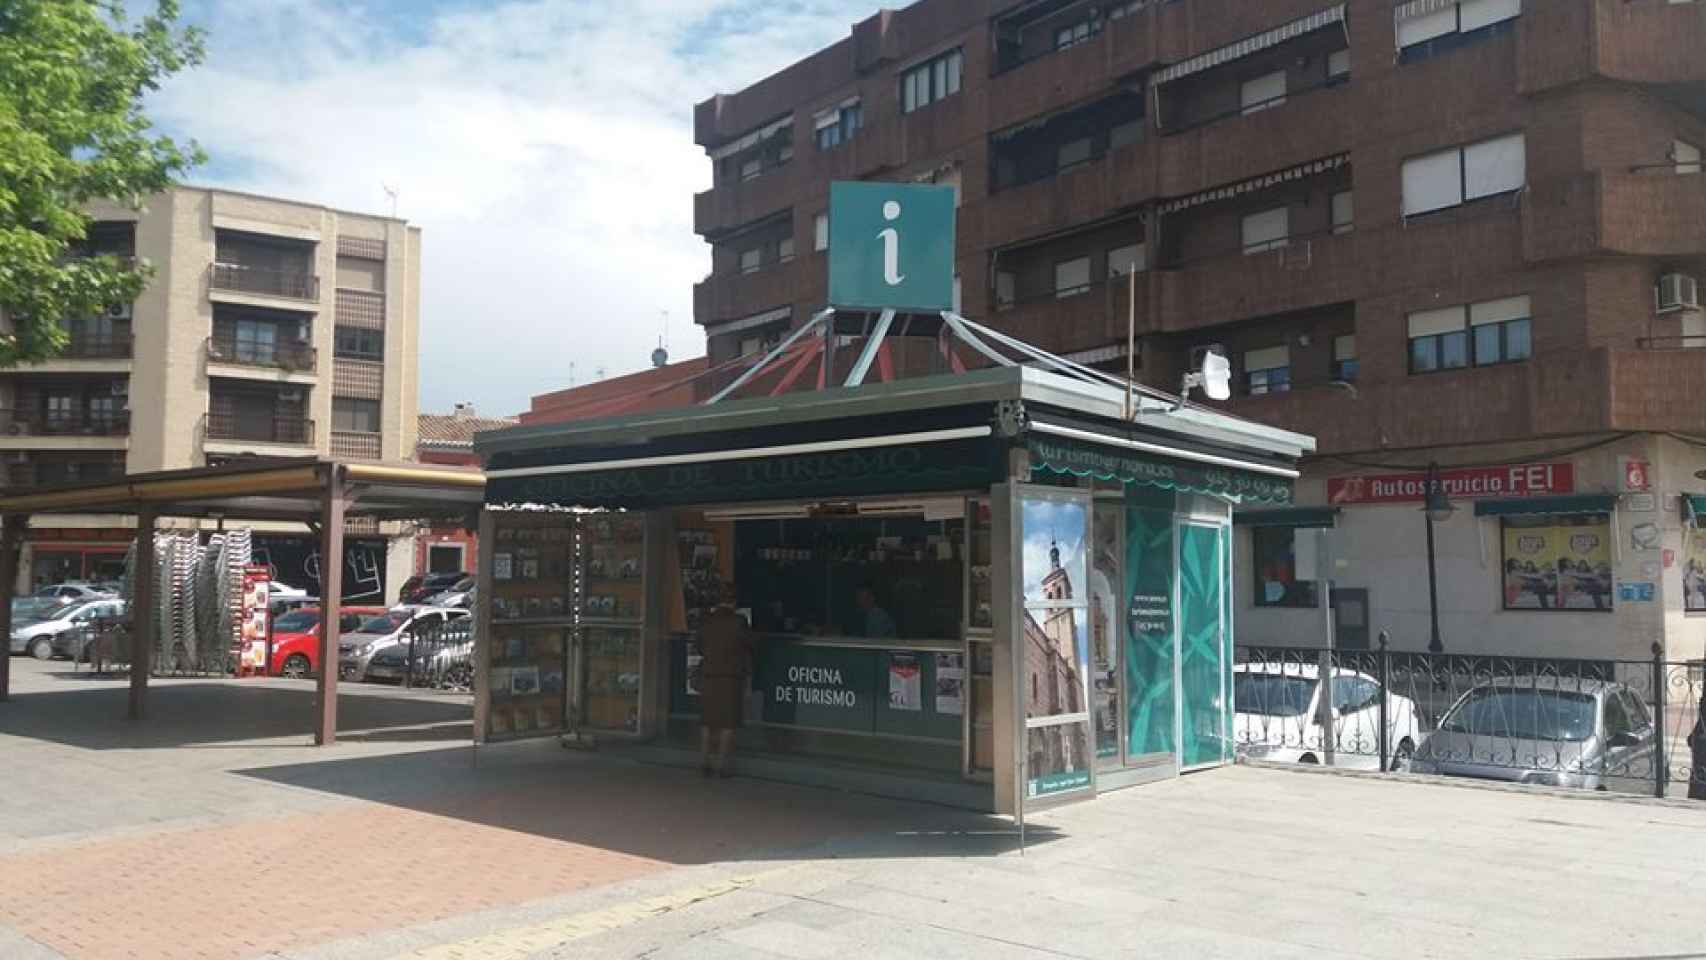 Oficina de Turismo de Mora (Toledo).